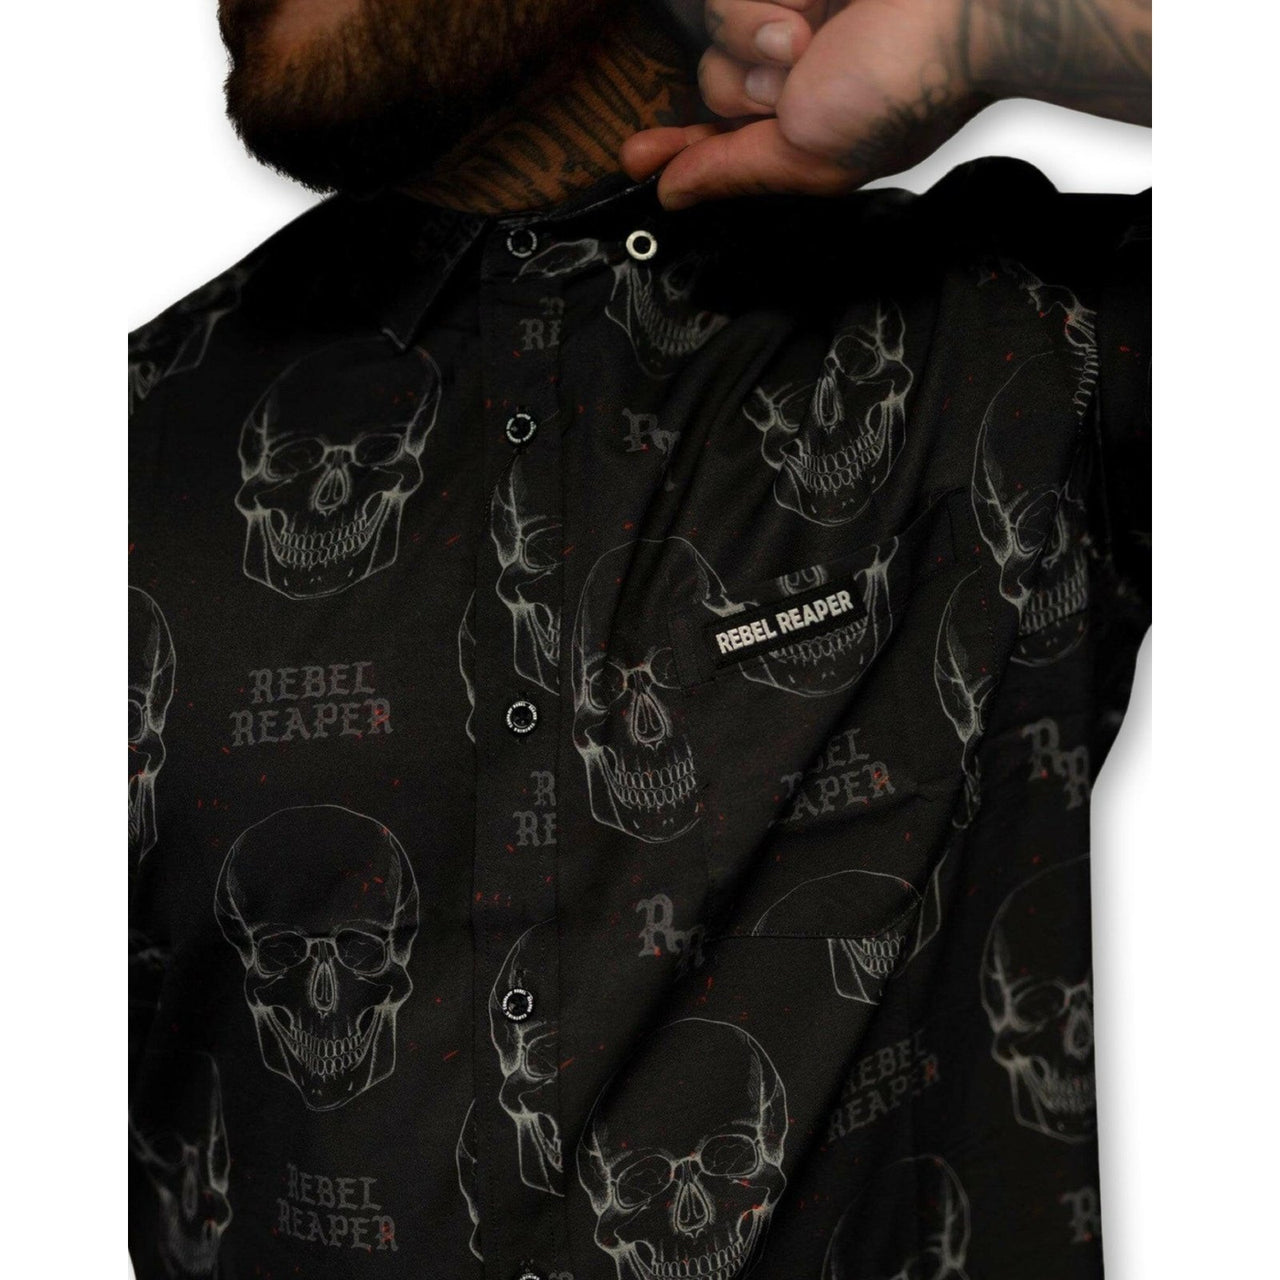 Splatter Skull Shirt - Rebel Reaper Clothing Company Button Up Shirt Men's